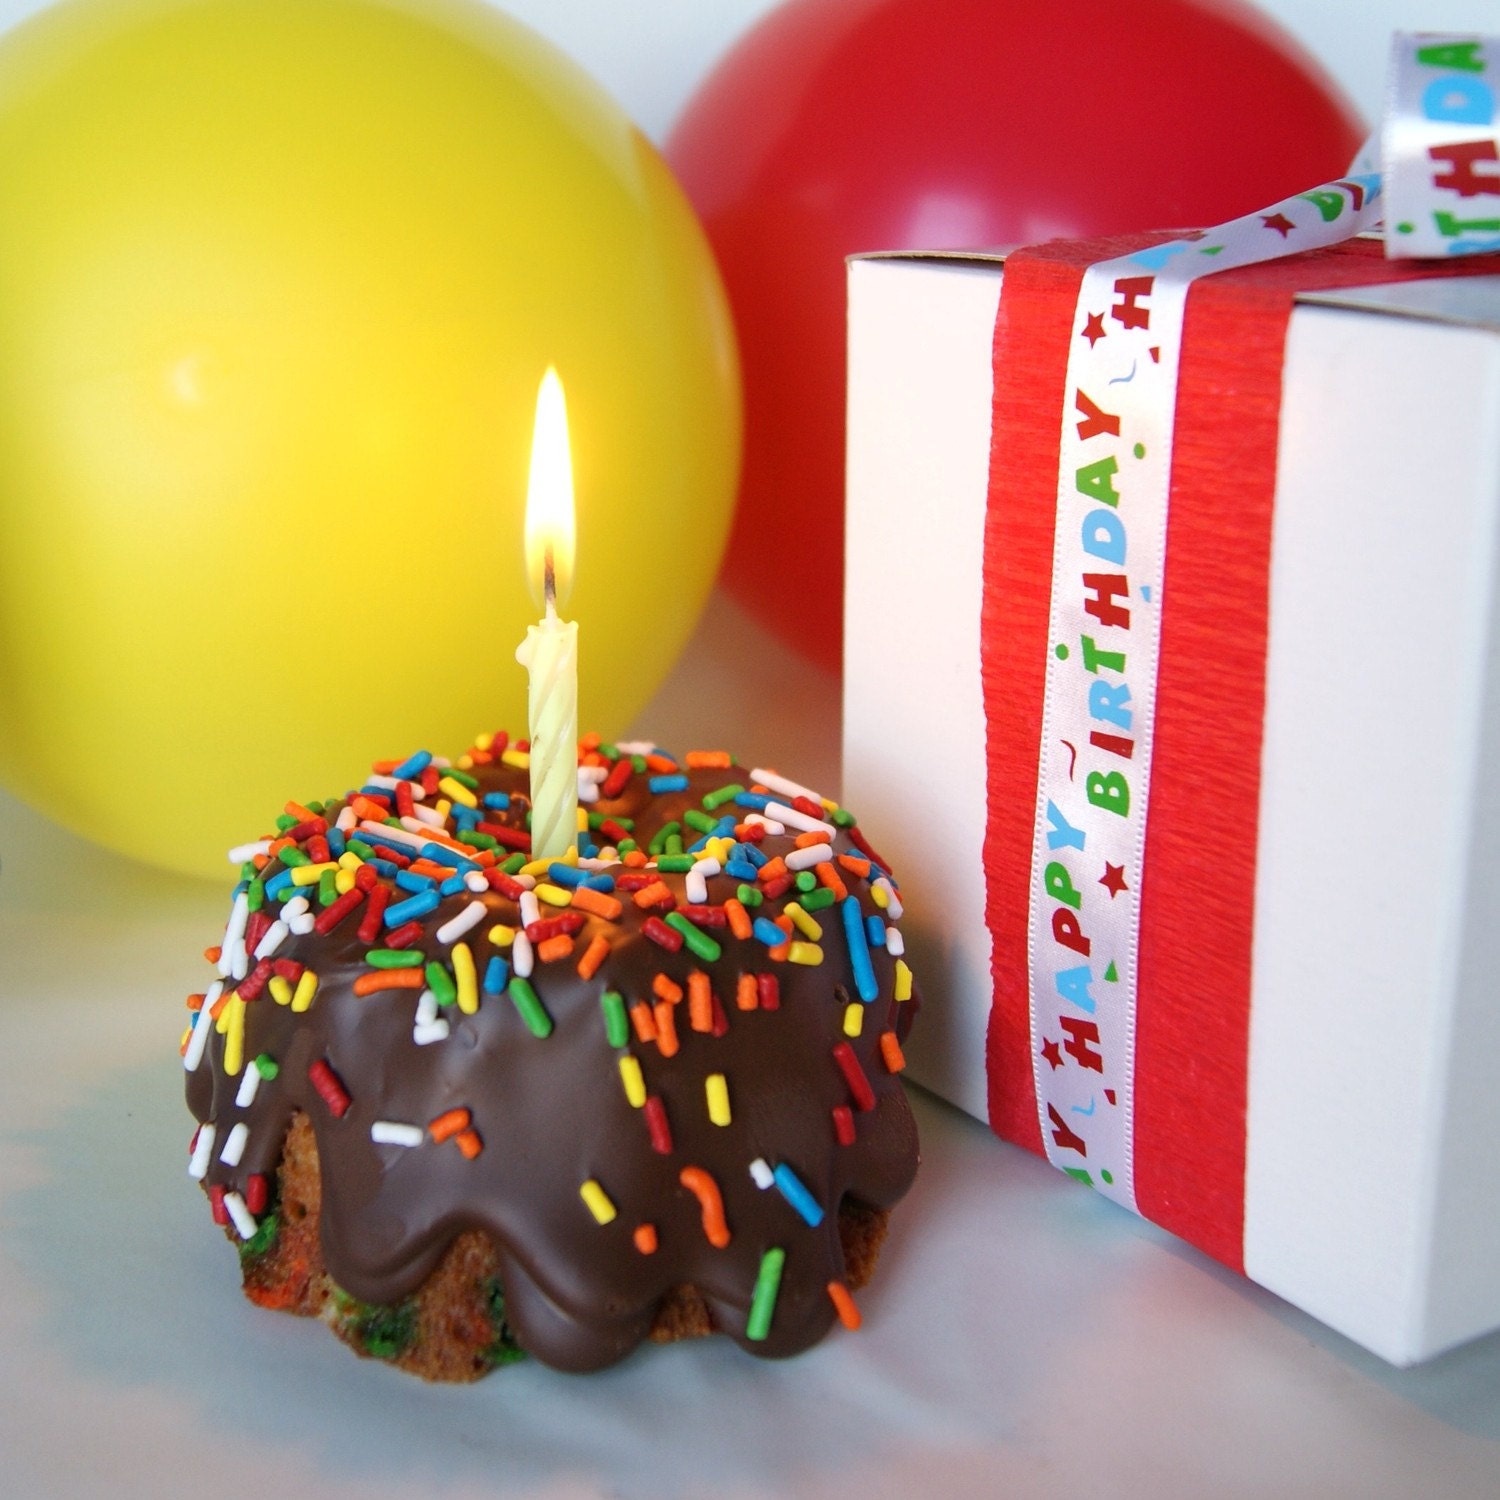 The Birthday Cake, mini bundt cake